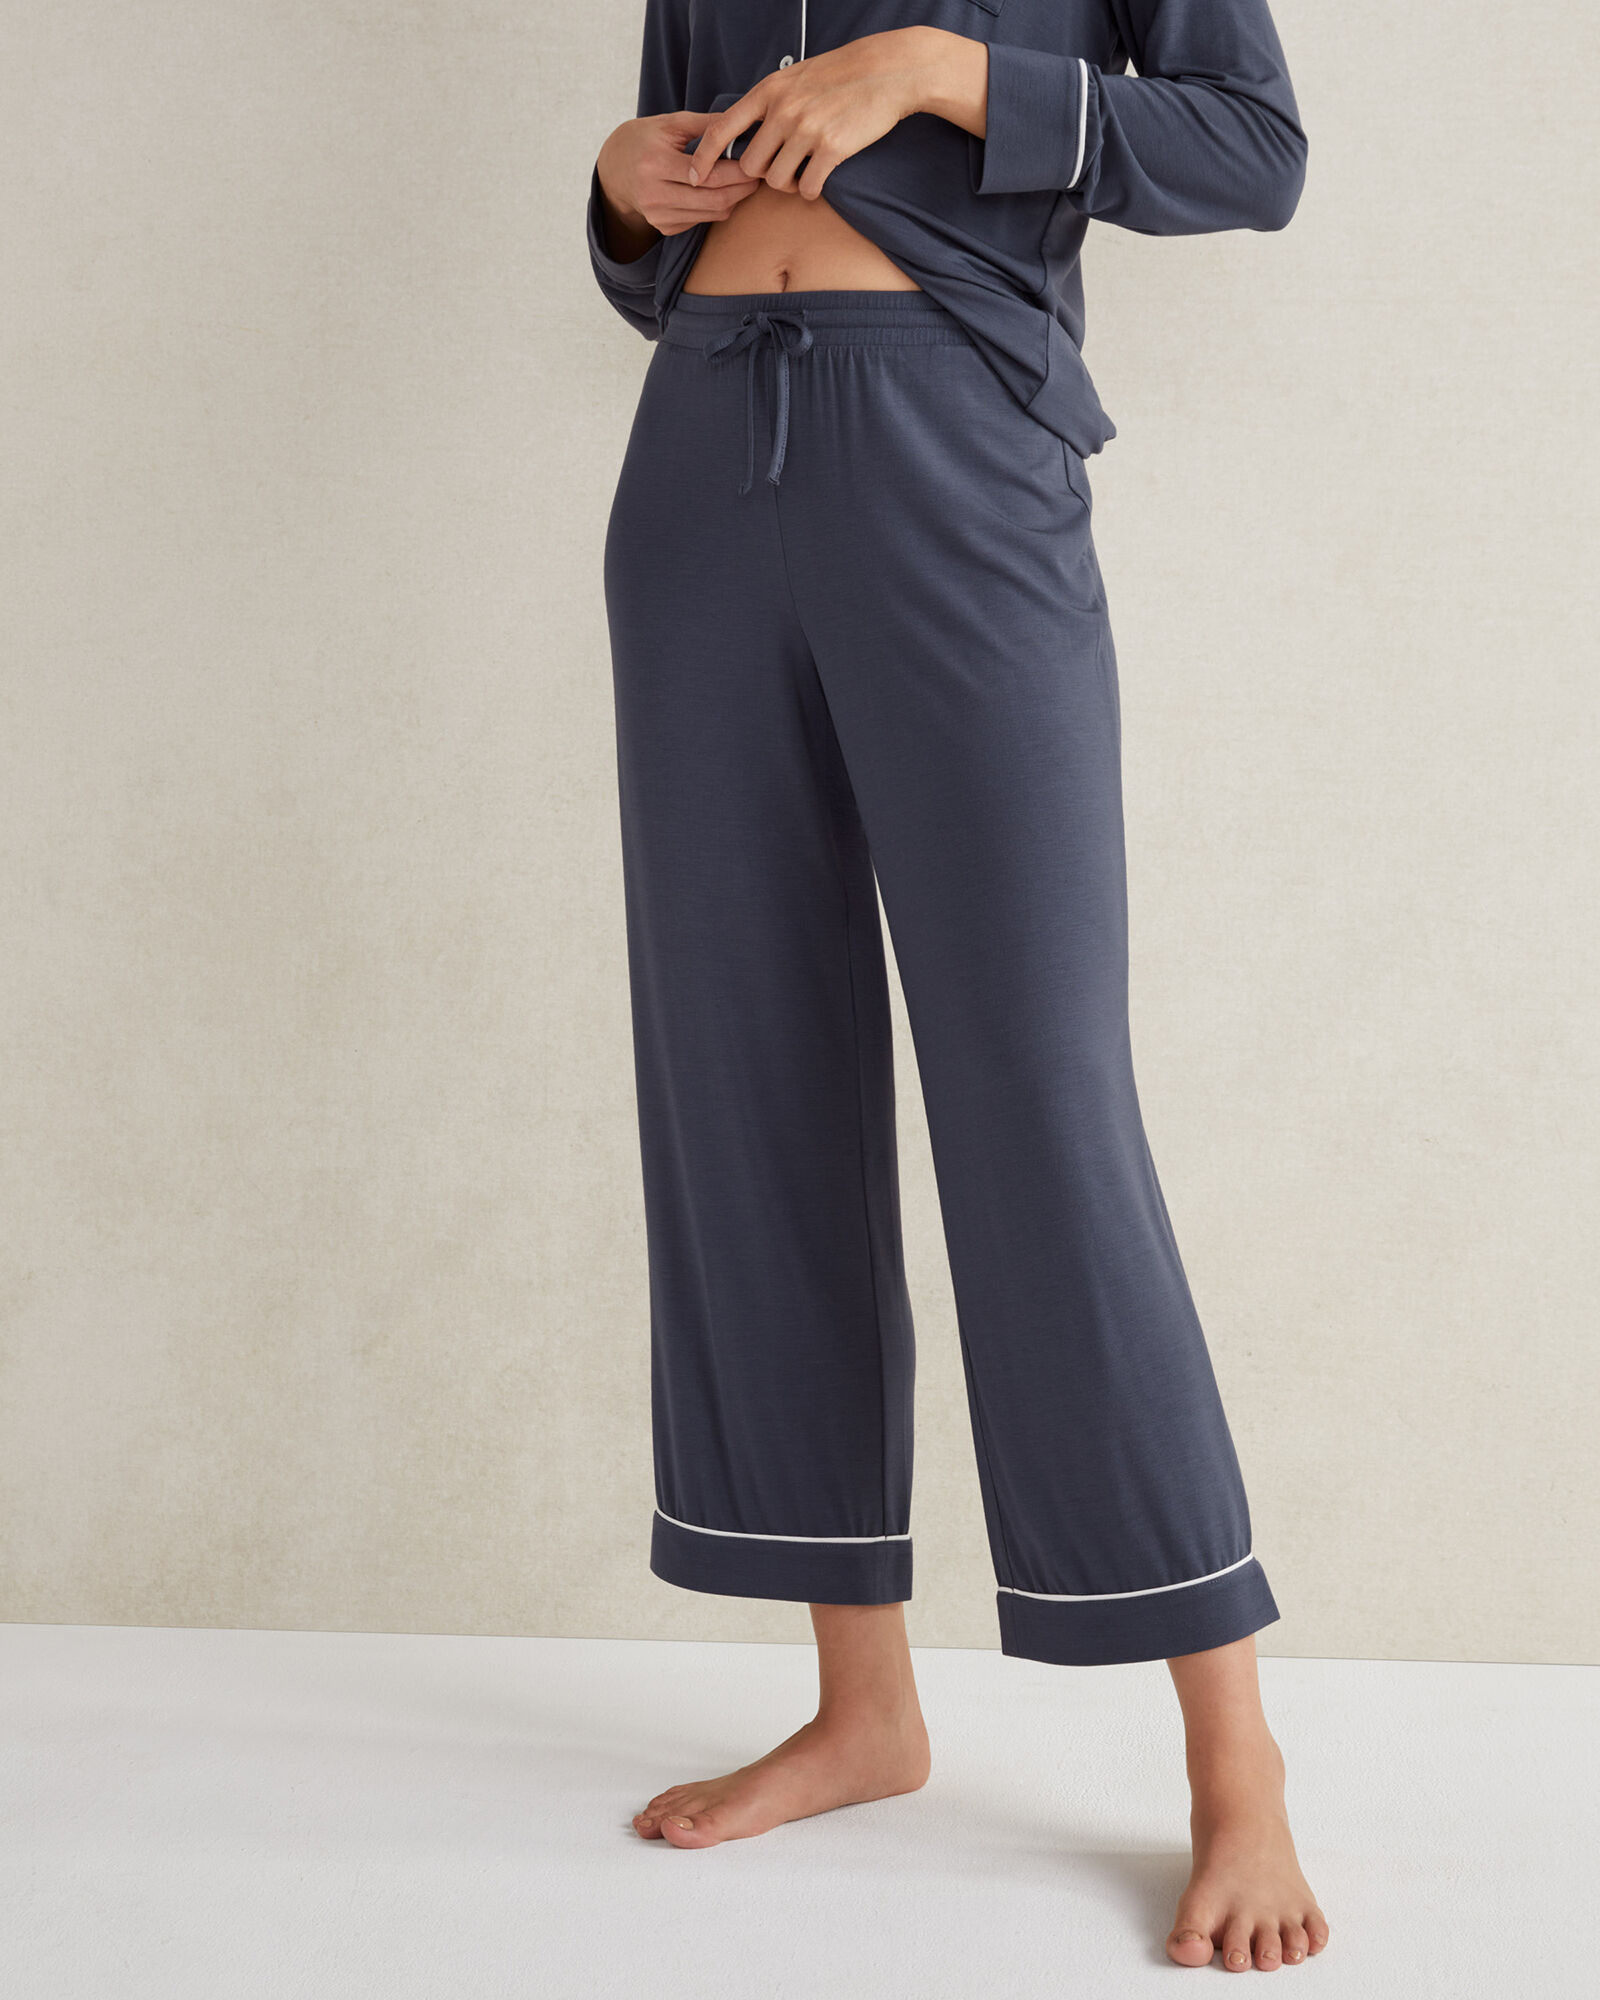 Sama Summer Pajama Pants - Cotton Lycra @ Best Price Online